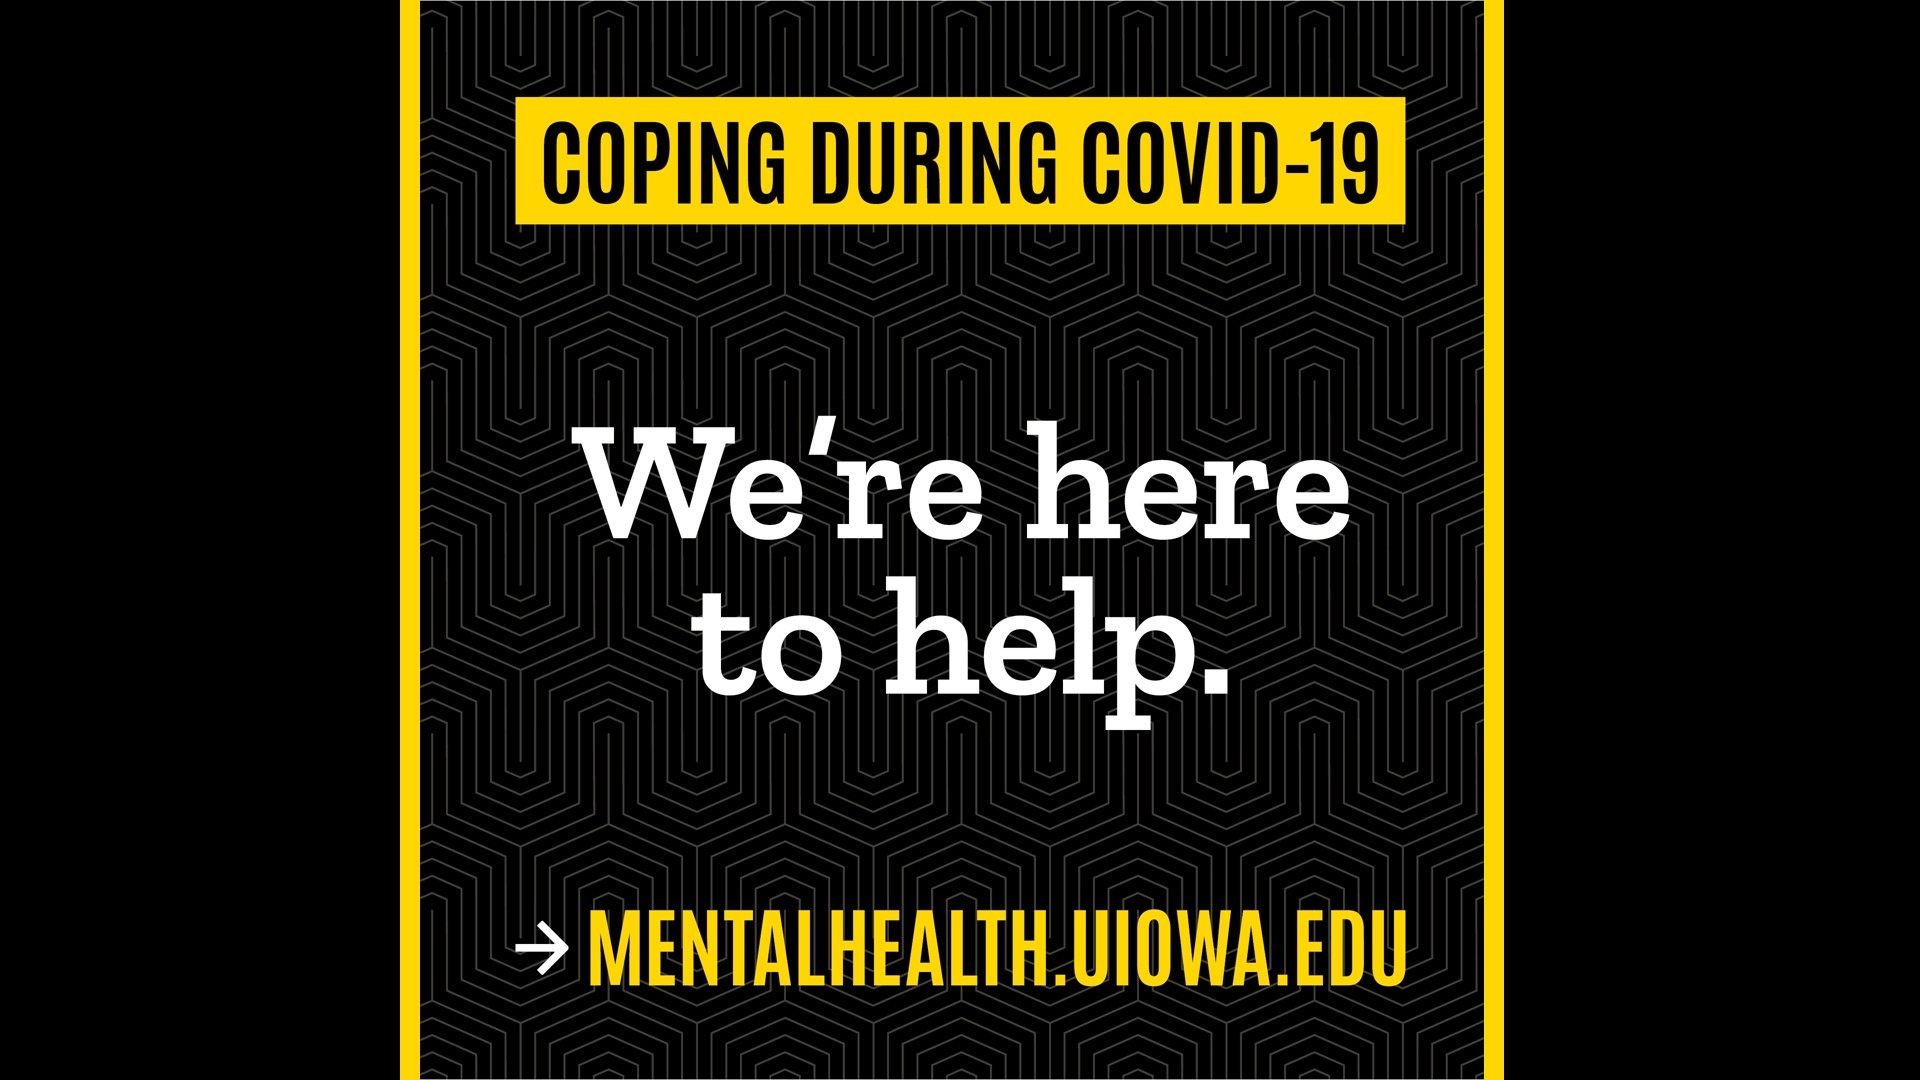 Coping during COVID-19. We're here to help. mentalhealth.uiowa.edu